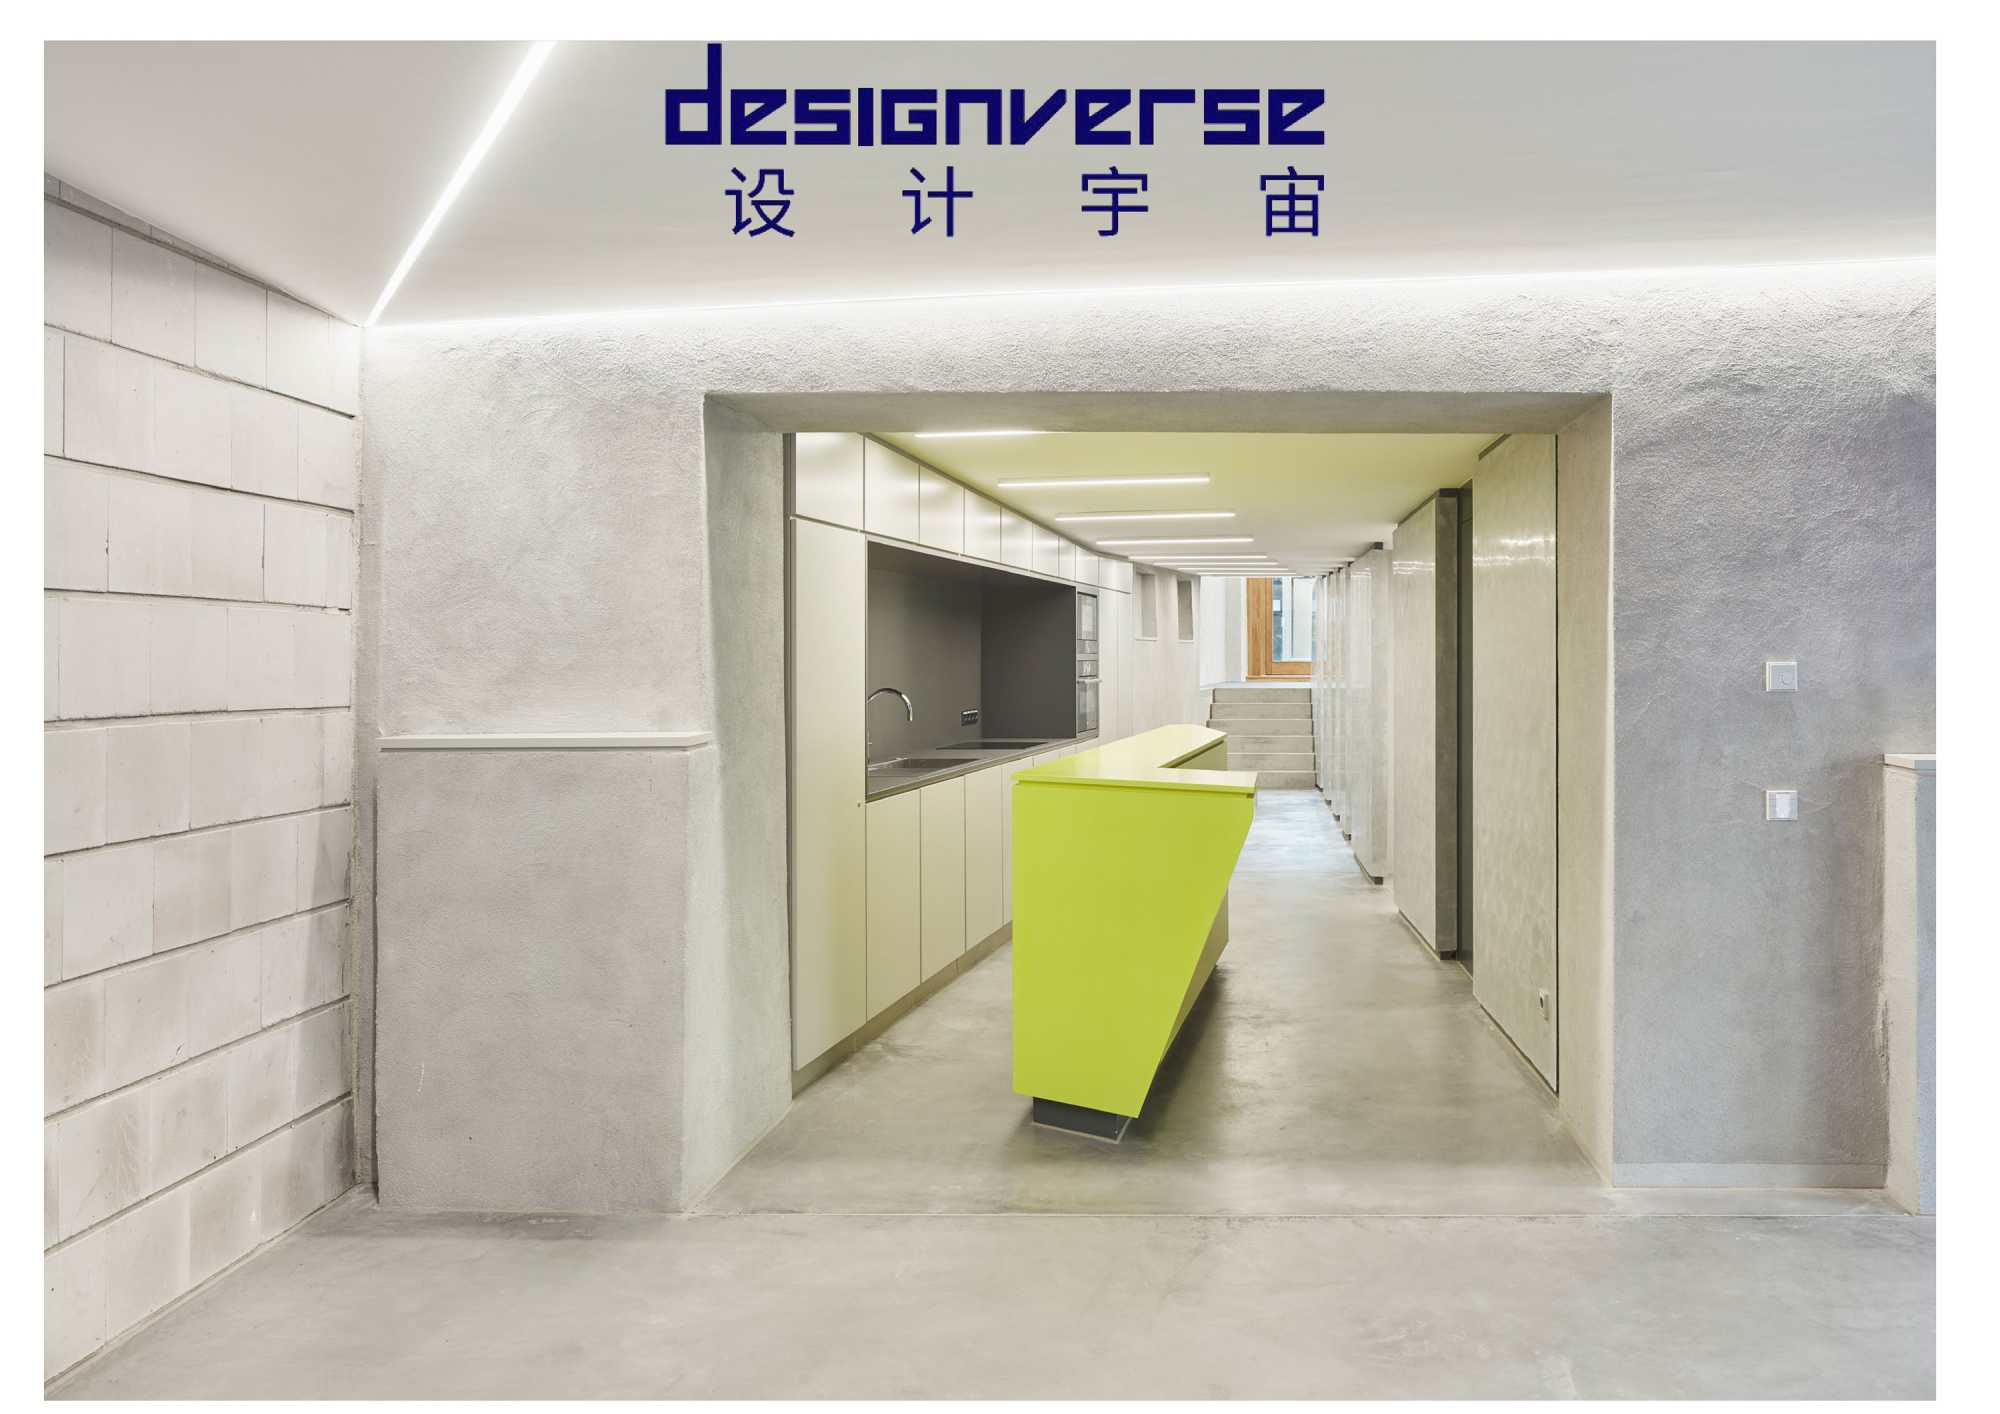 designverse veröffentlicht in Asien unser Projekt in der Tübinger Altstadt ({project_images:field_row_count})